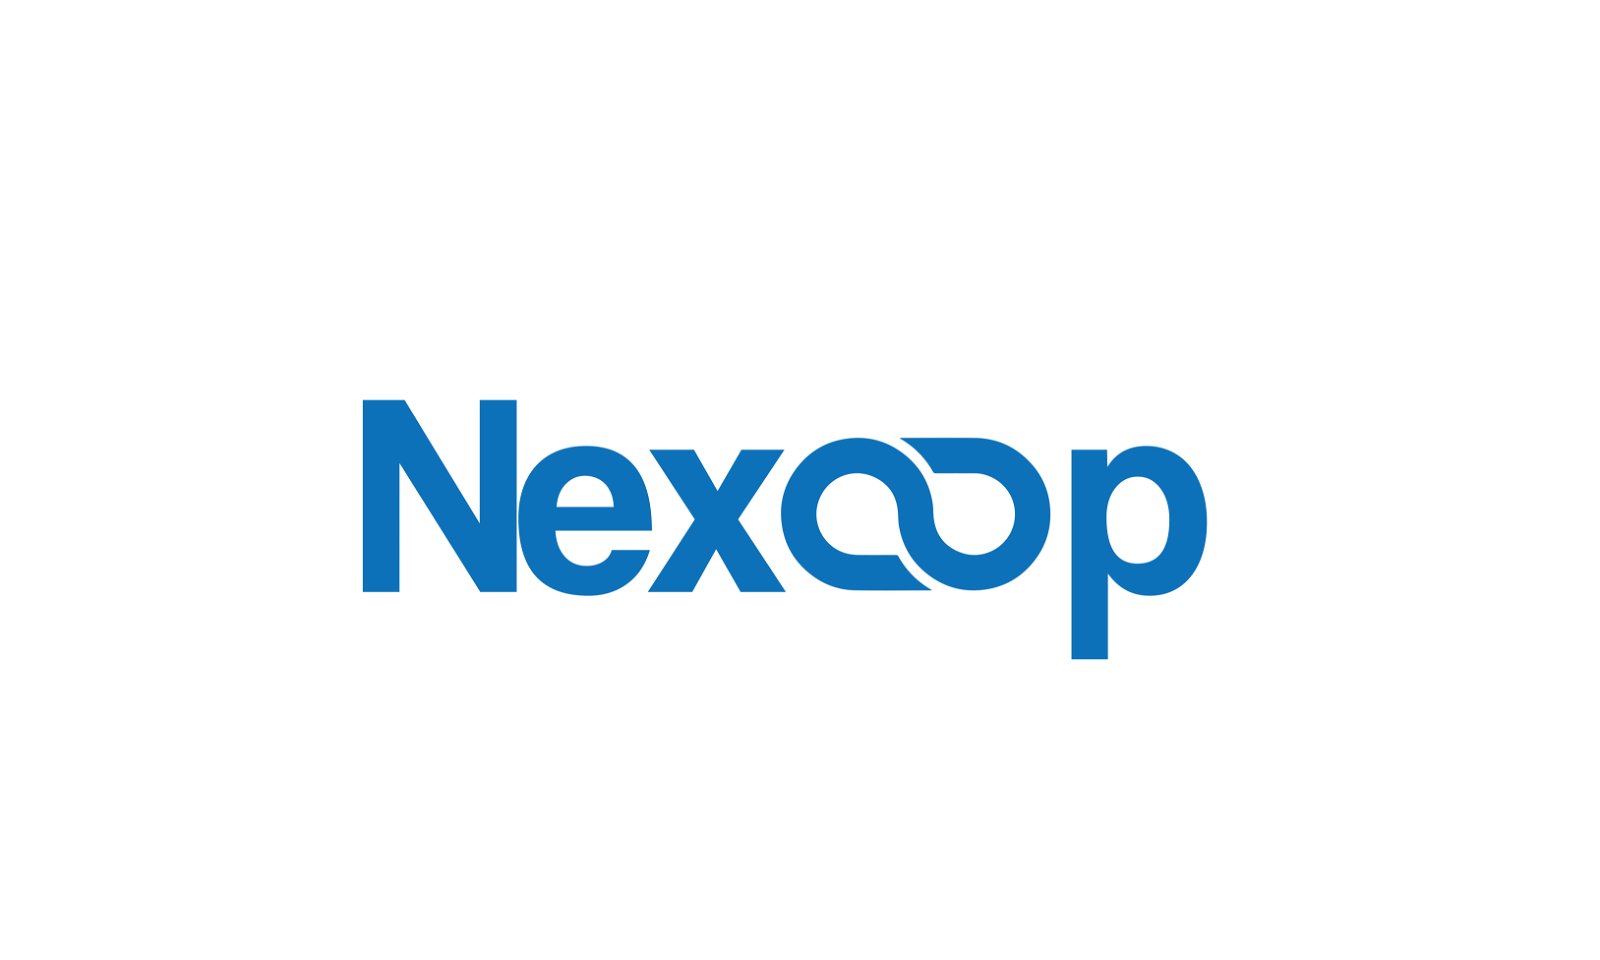 Nexoop.com - Creative brandable domain for sale